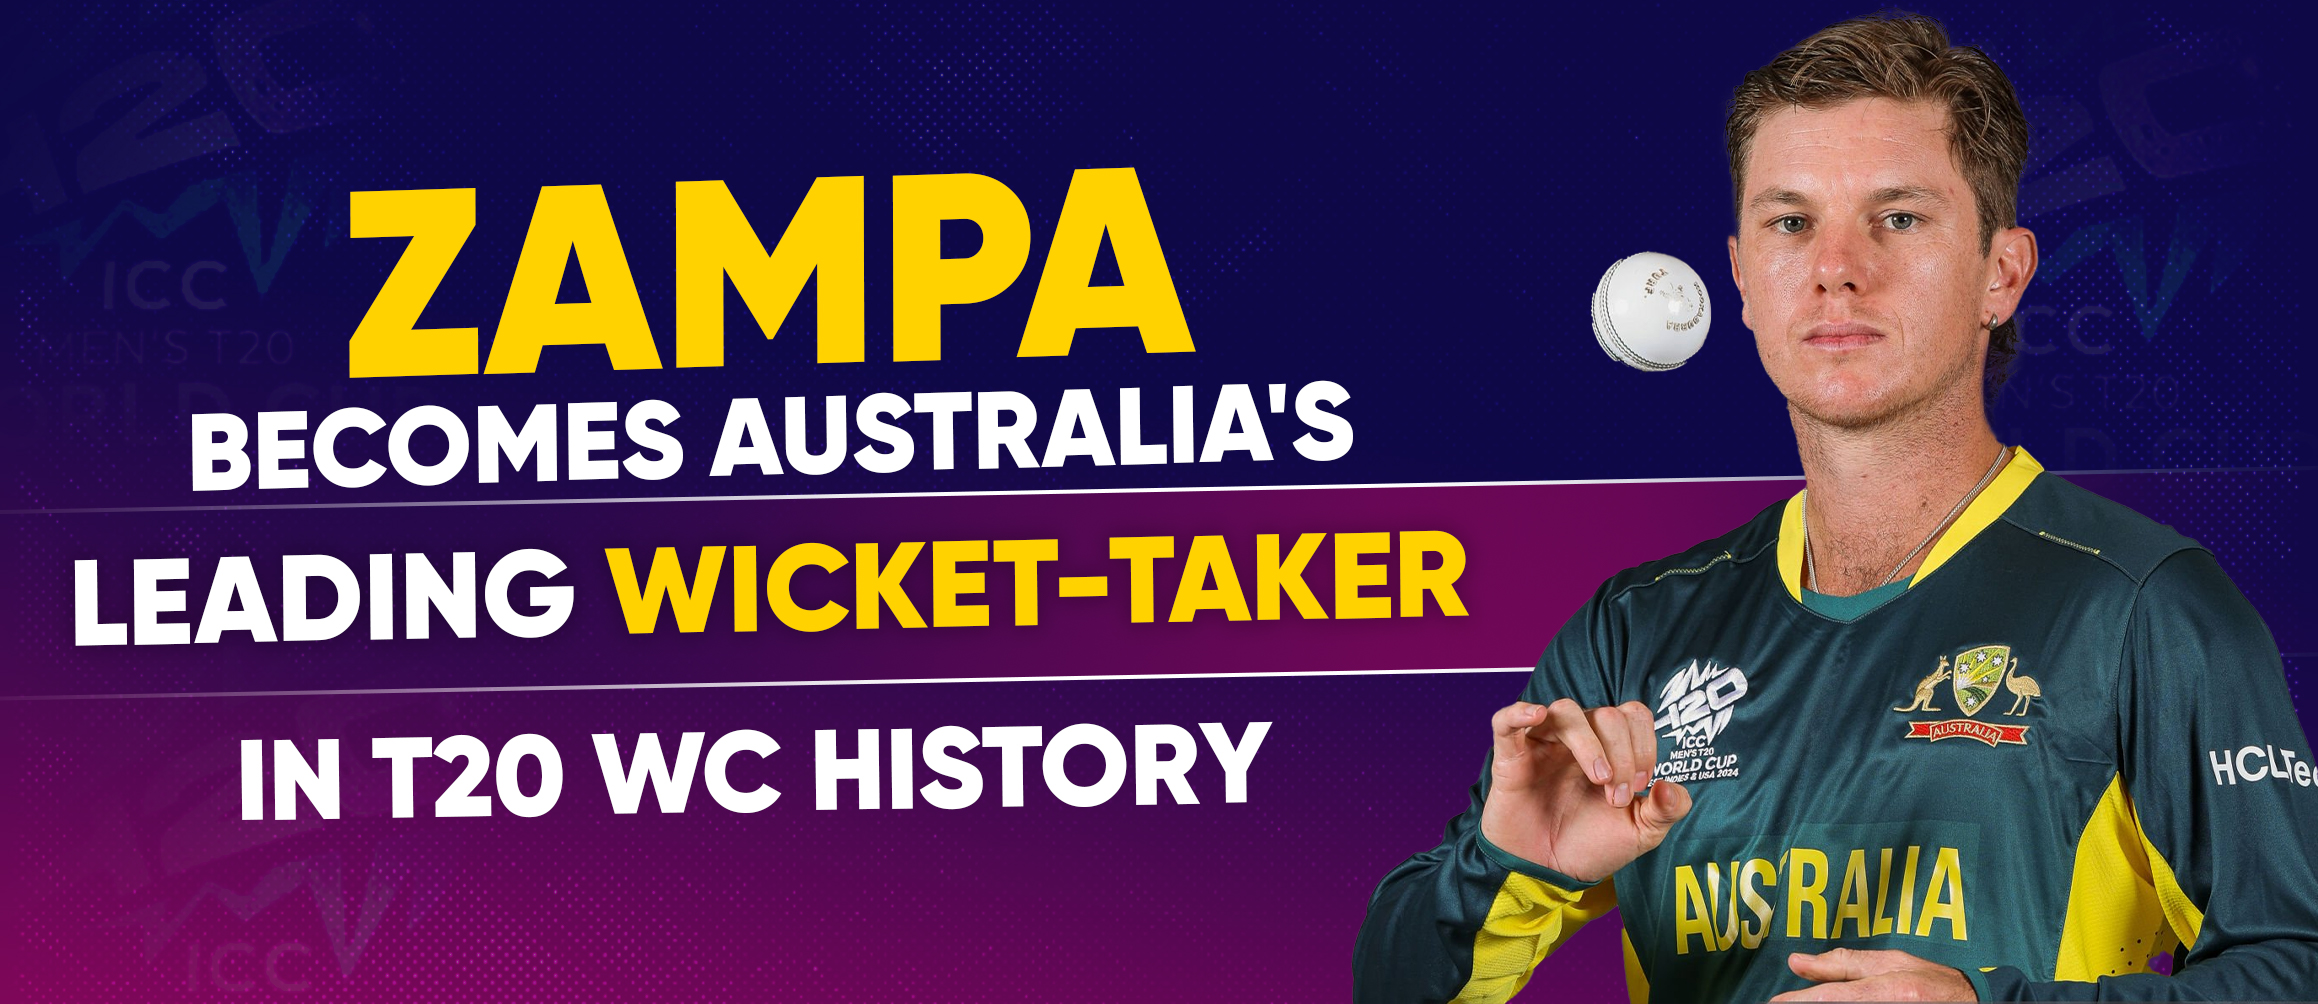 Zampa becomes Australia’s leading wicket-taker in T20 WC history